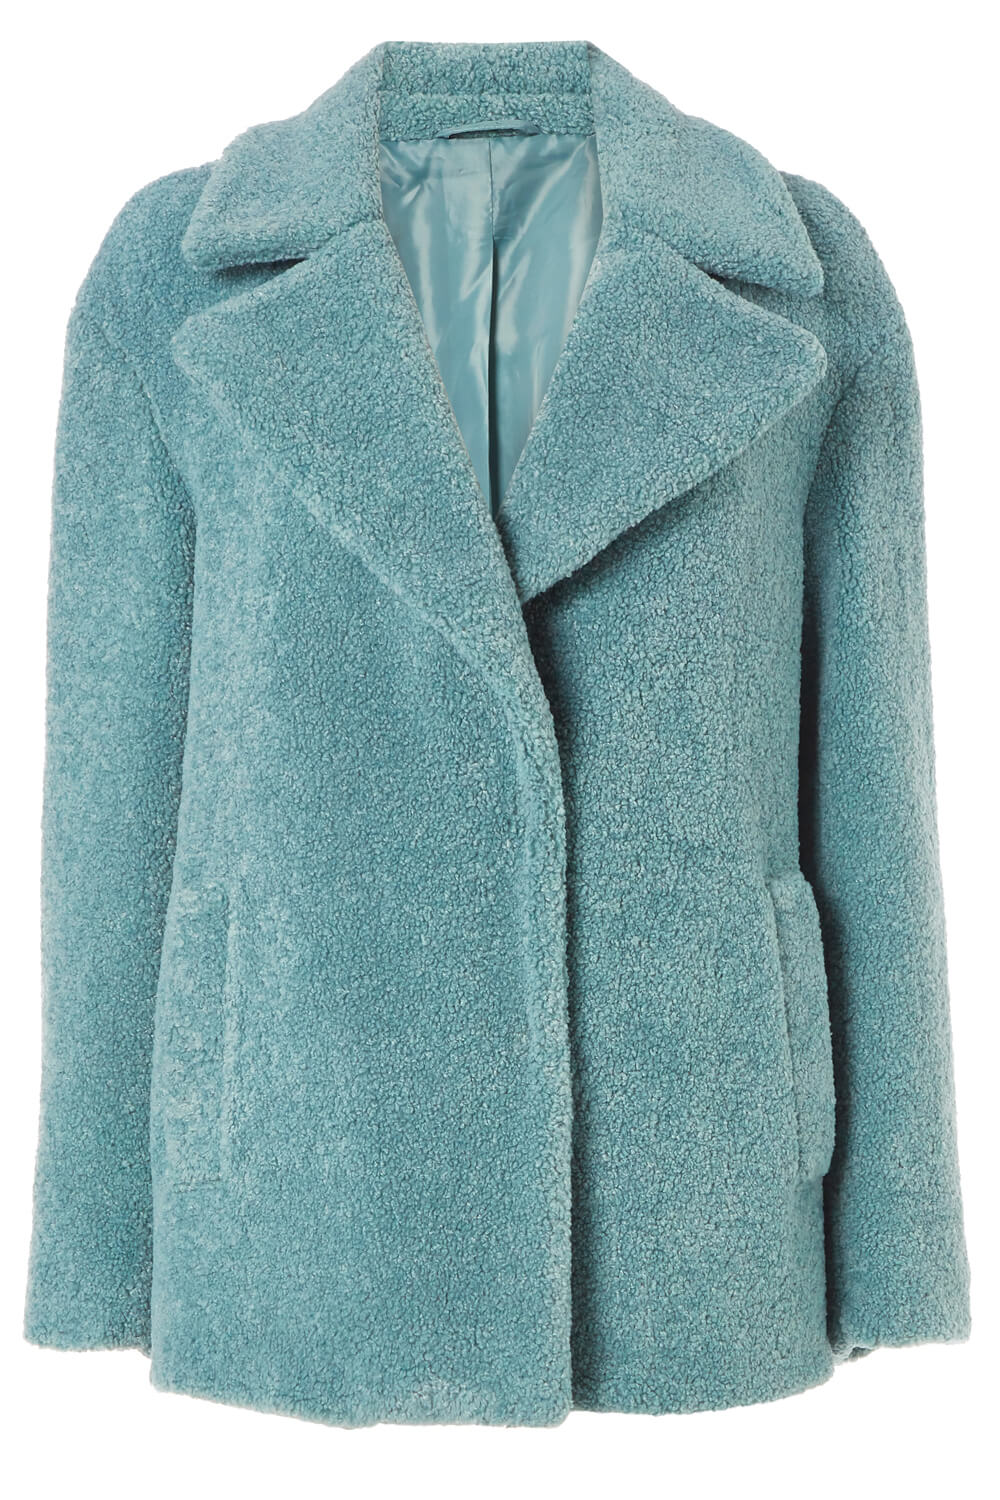 Sage Short Soft Faux Fur Teddy Coat, Image 5 of 5